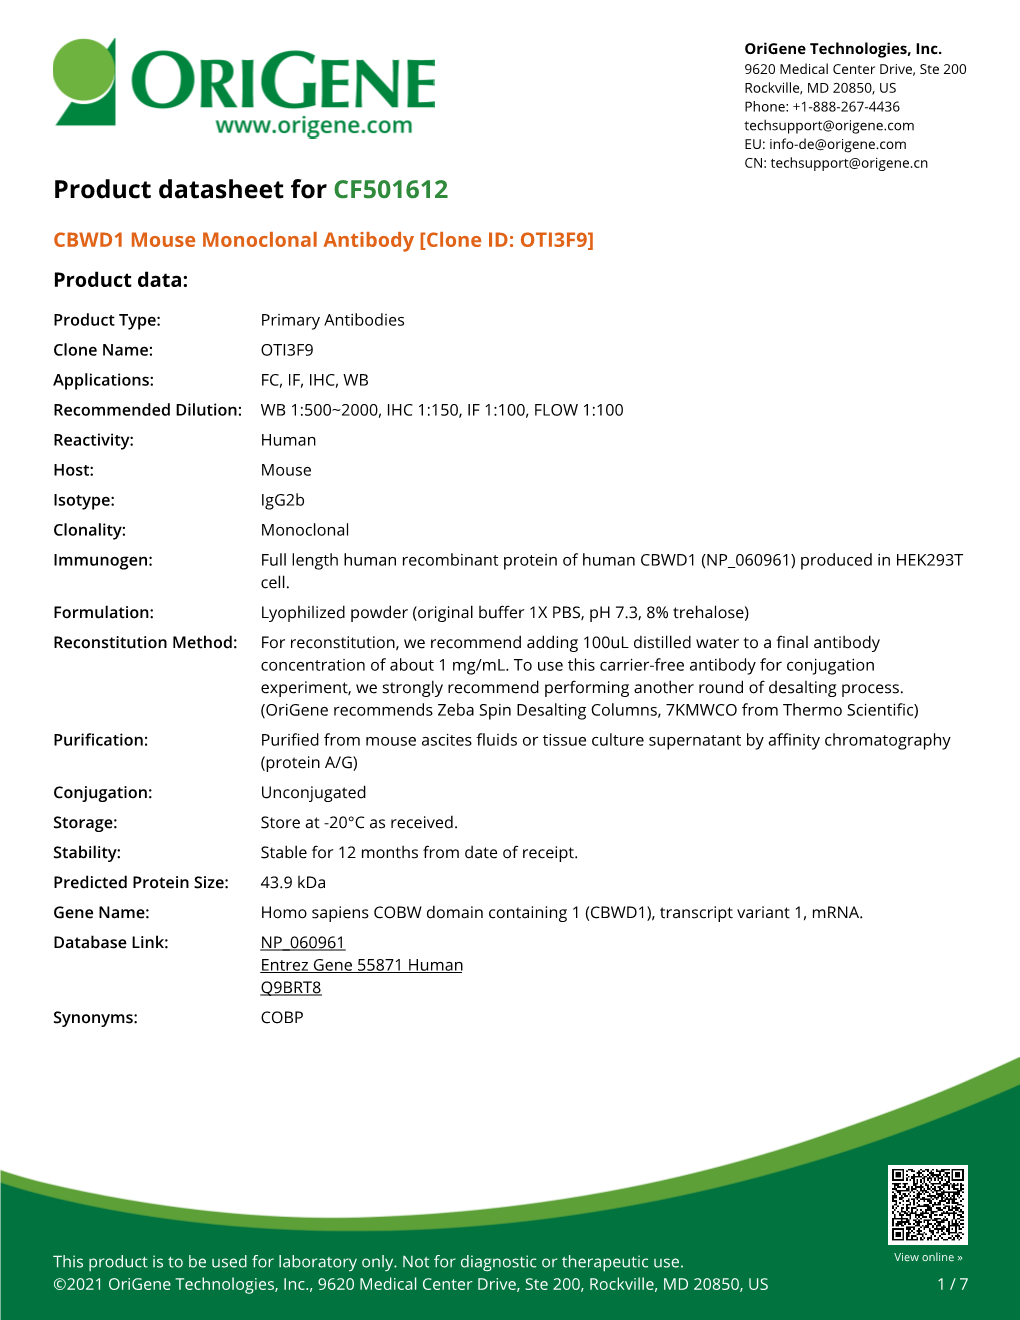 CBWD1 Mouse Monoclonal Antibody [Clone ID: OTI3F9] Product Data